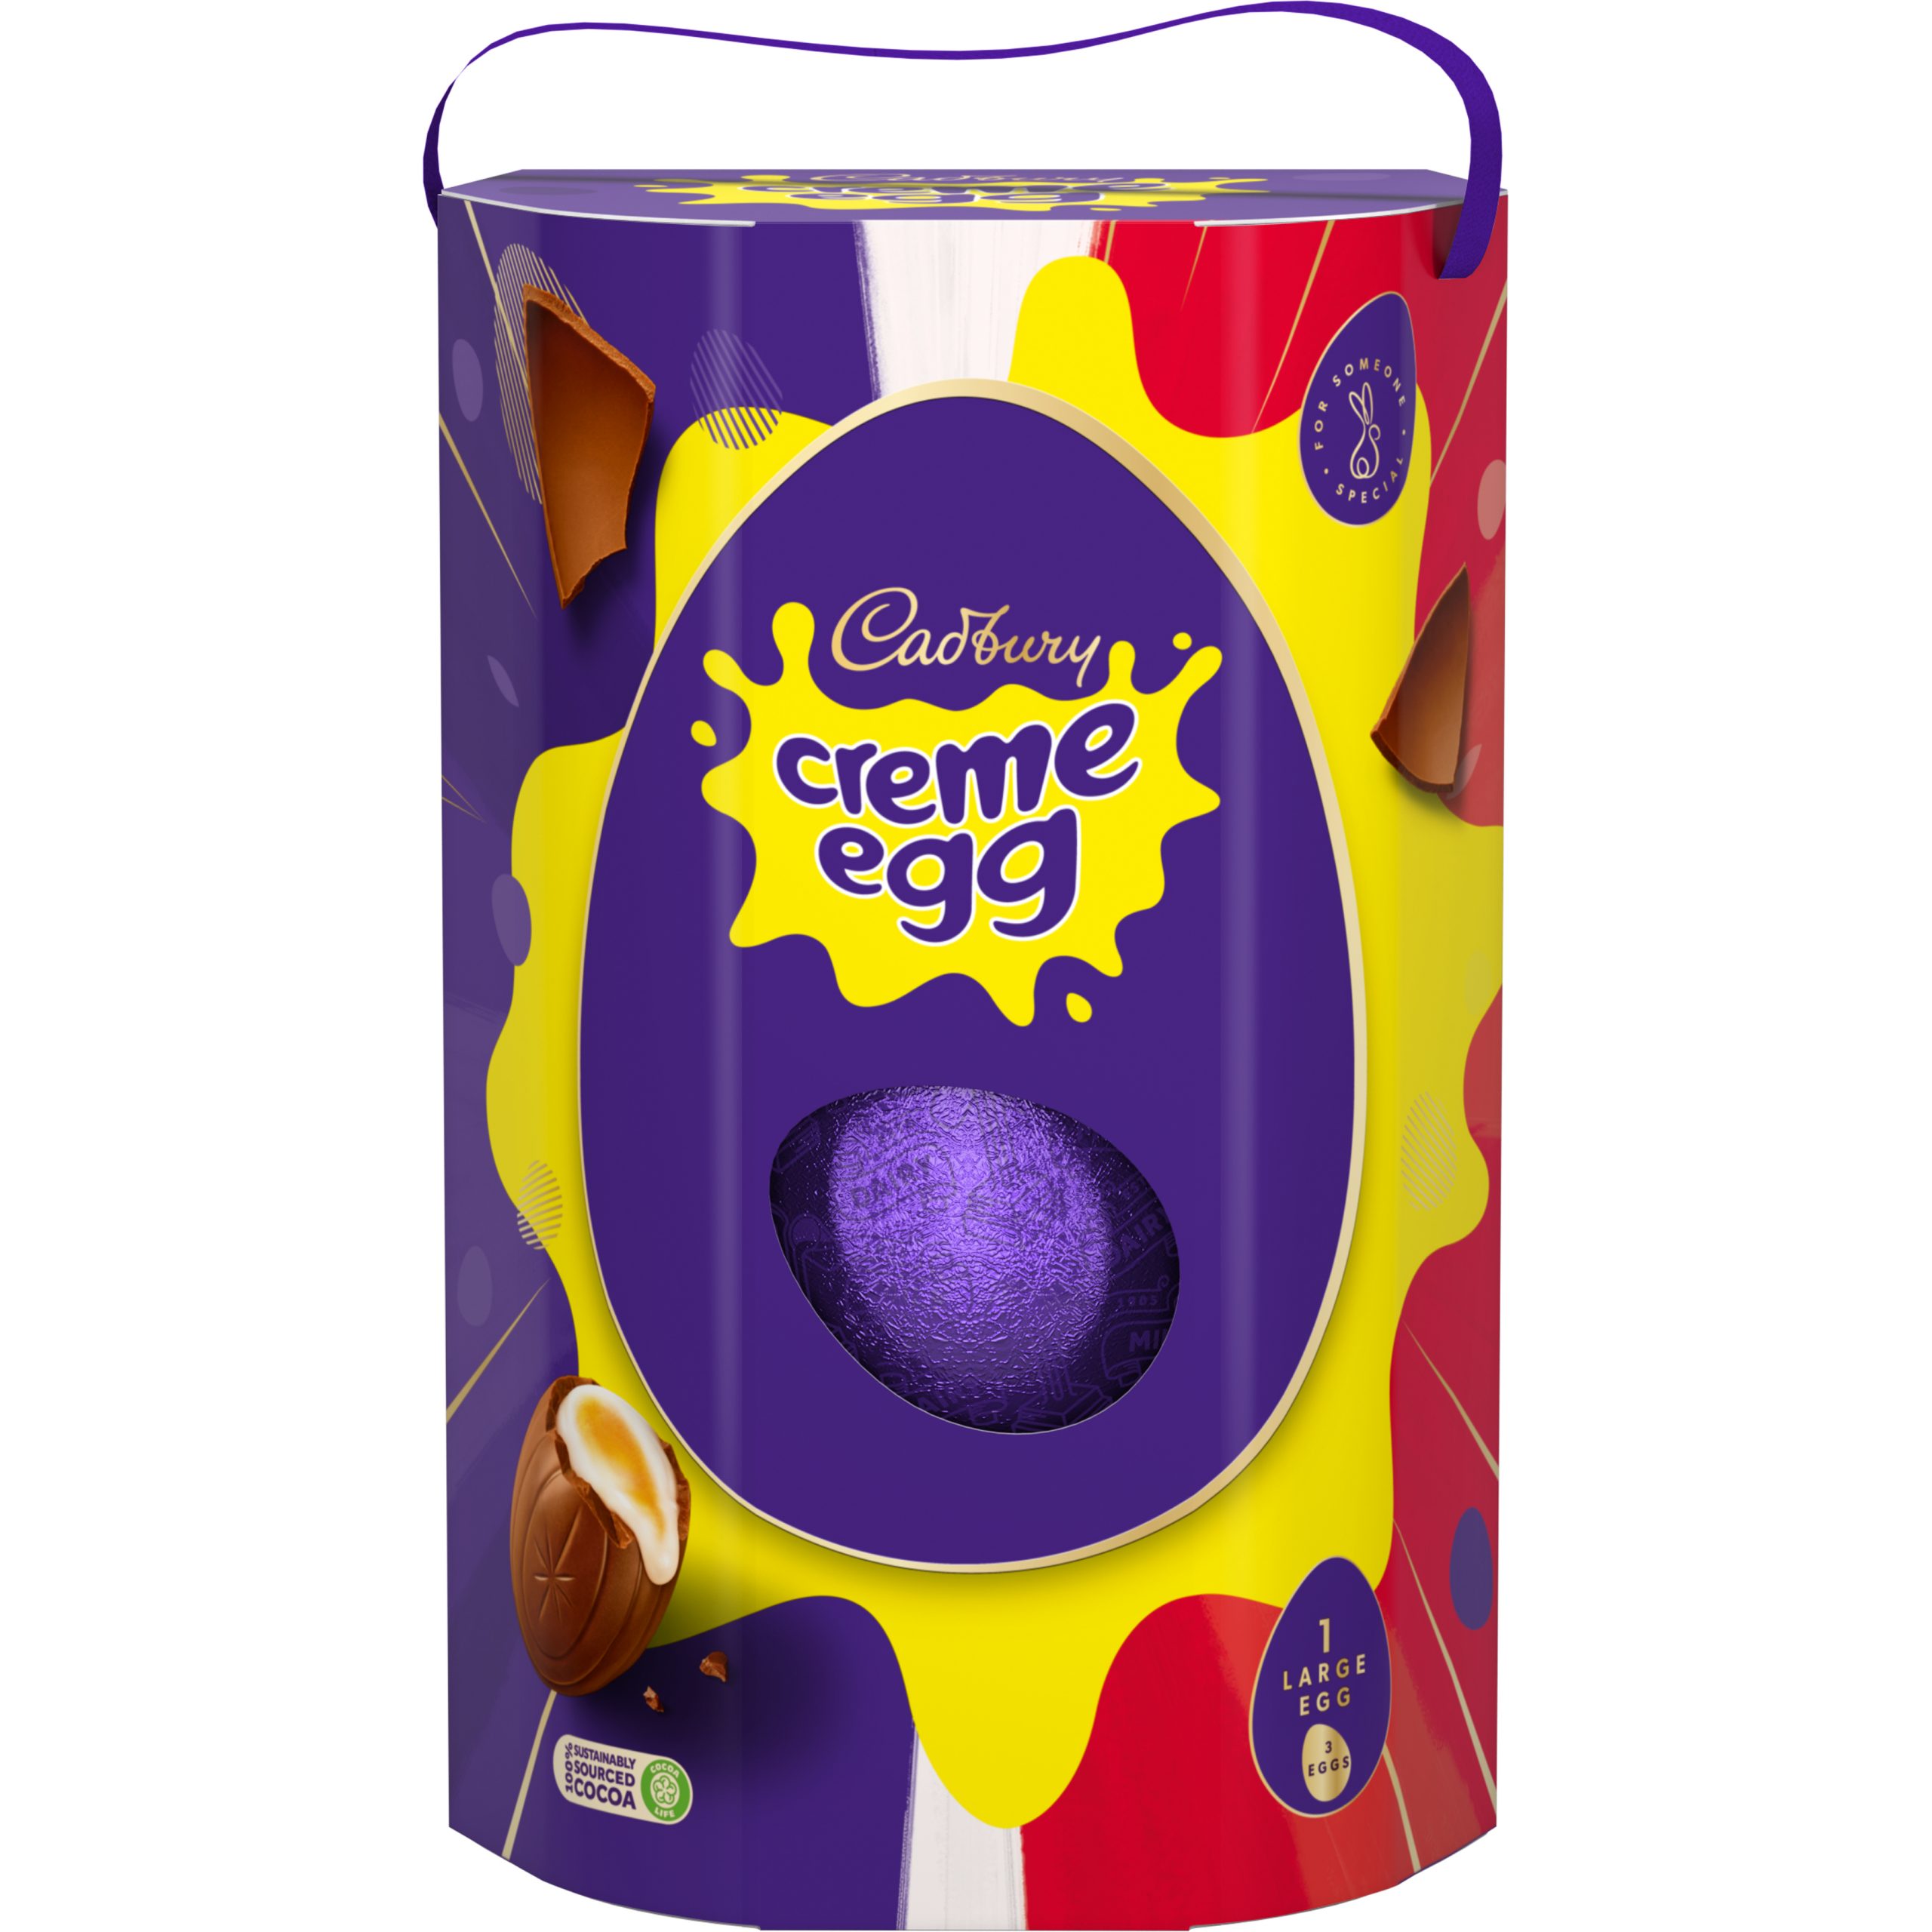 Cadbury unveils full Easter 2022 range